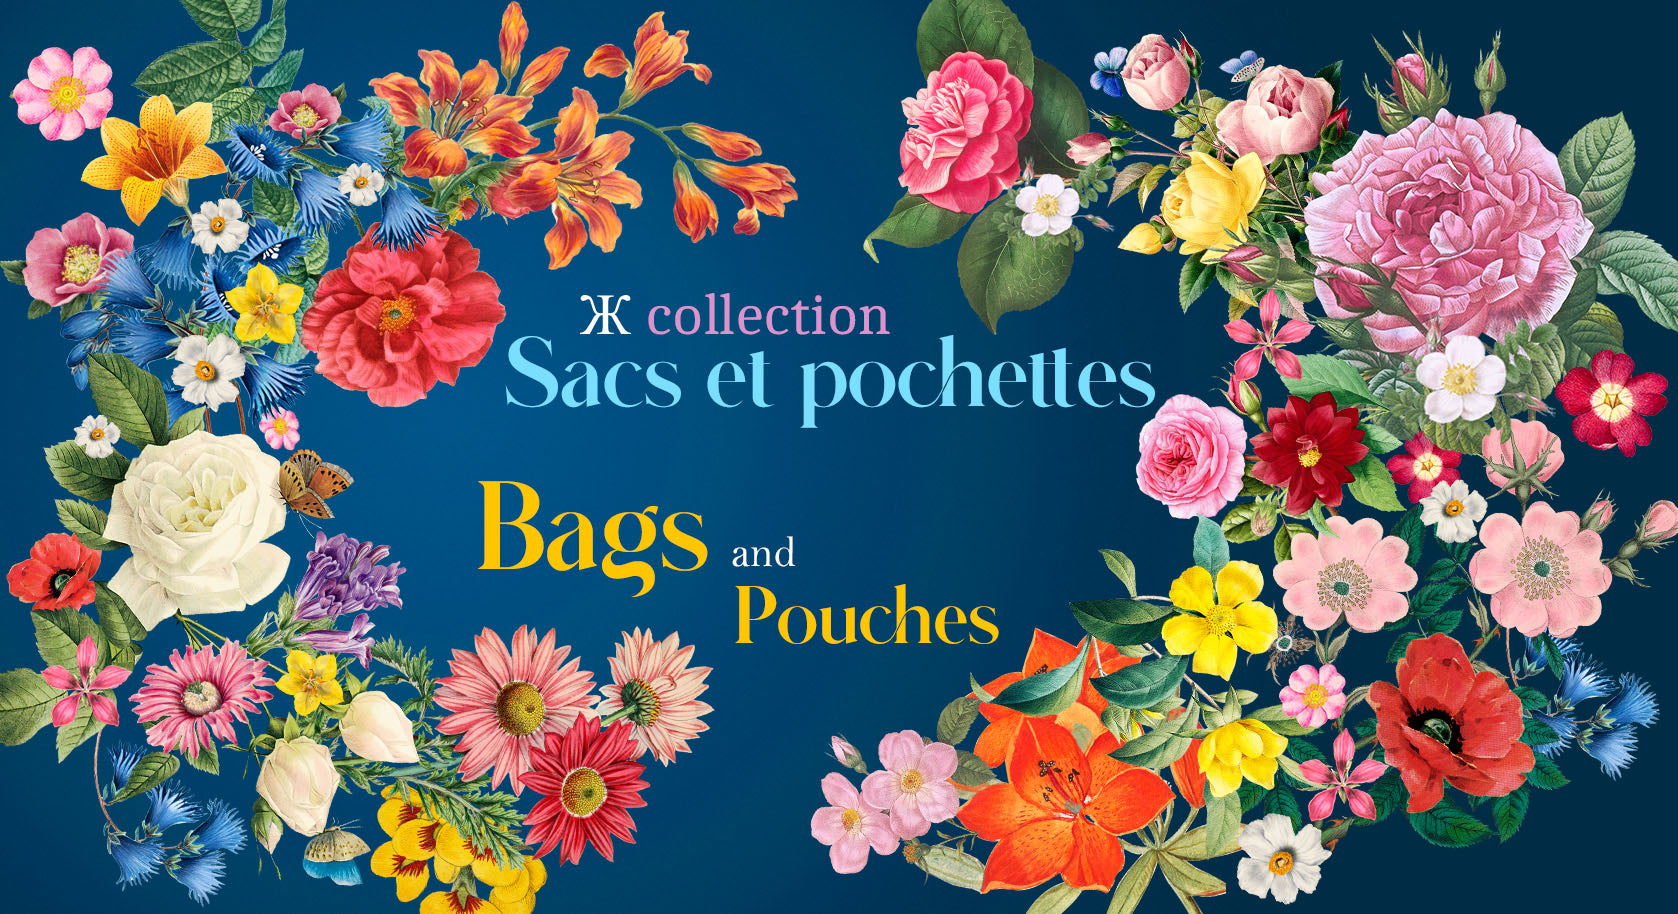 Sacs & pochettes / Bags & pouches